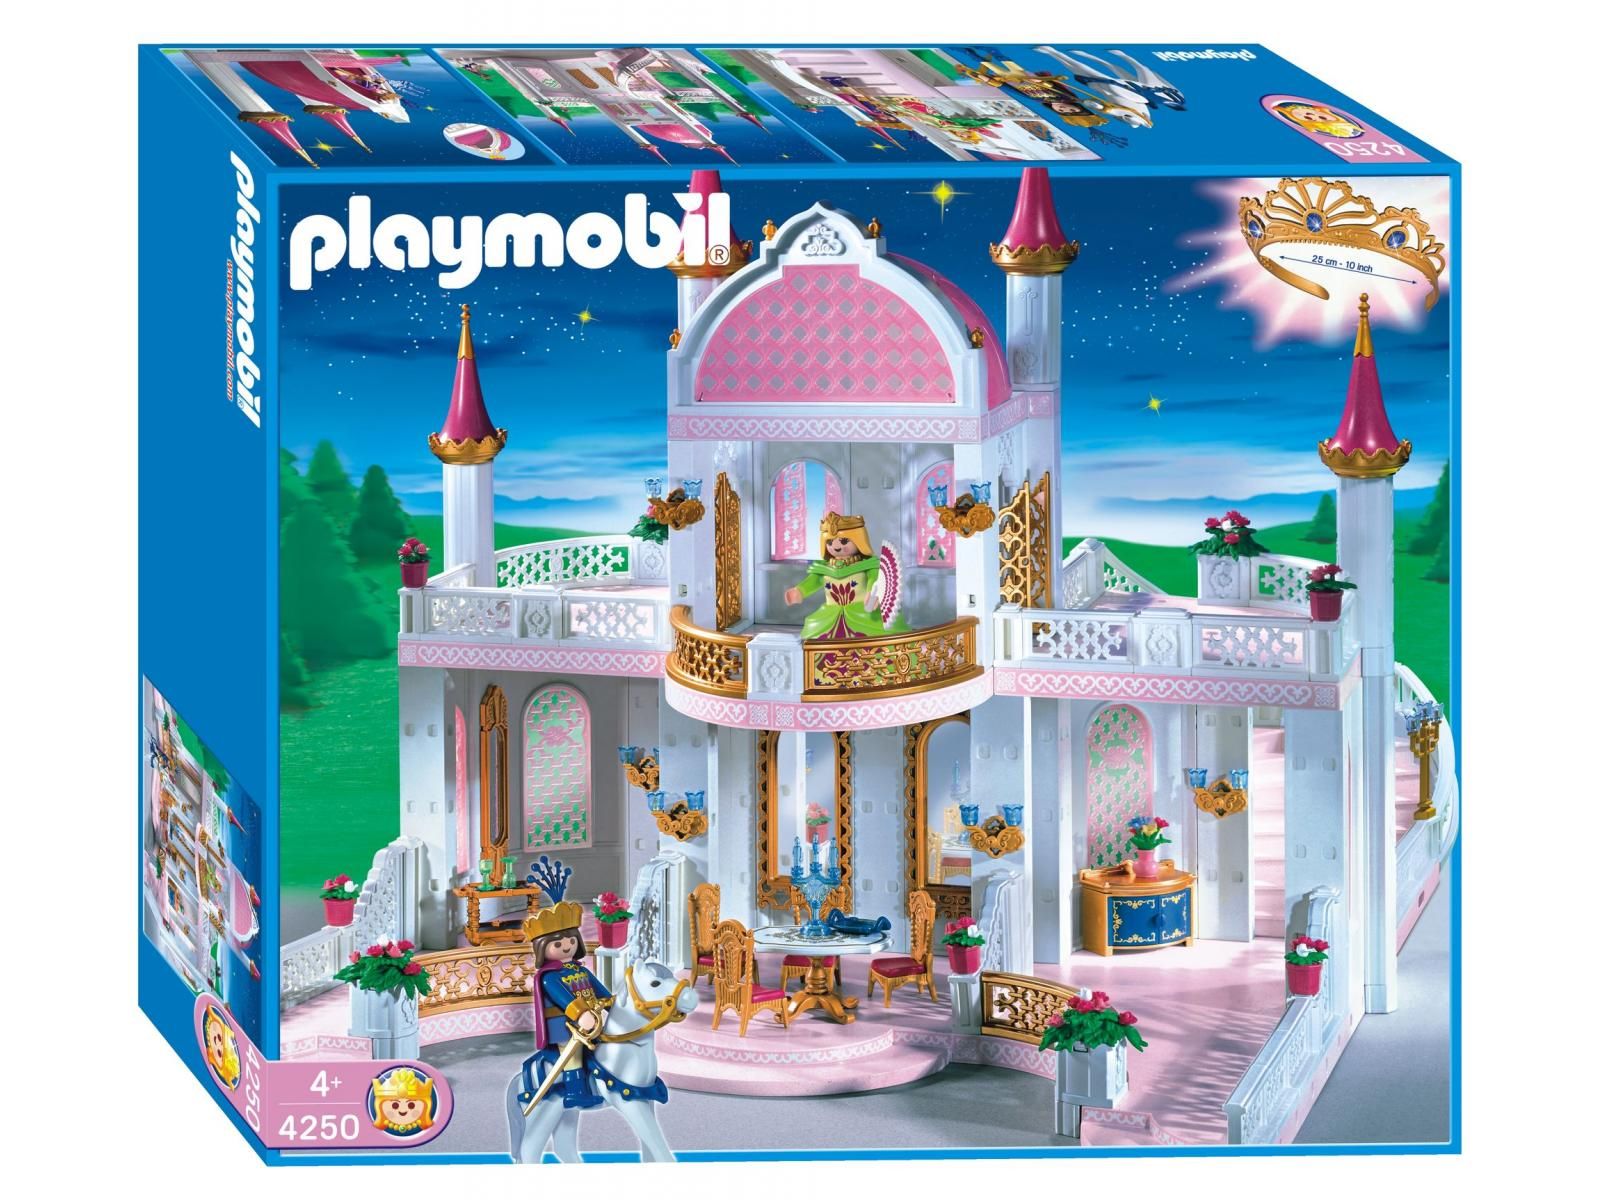 château playmobil